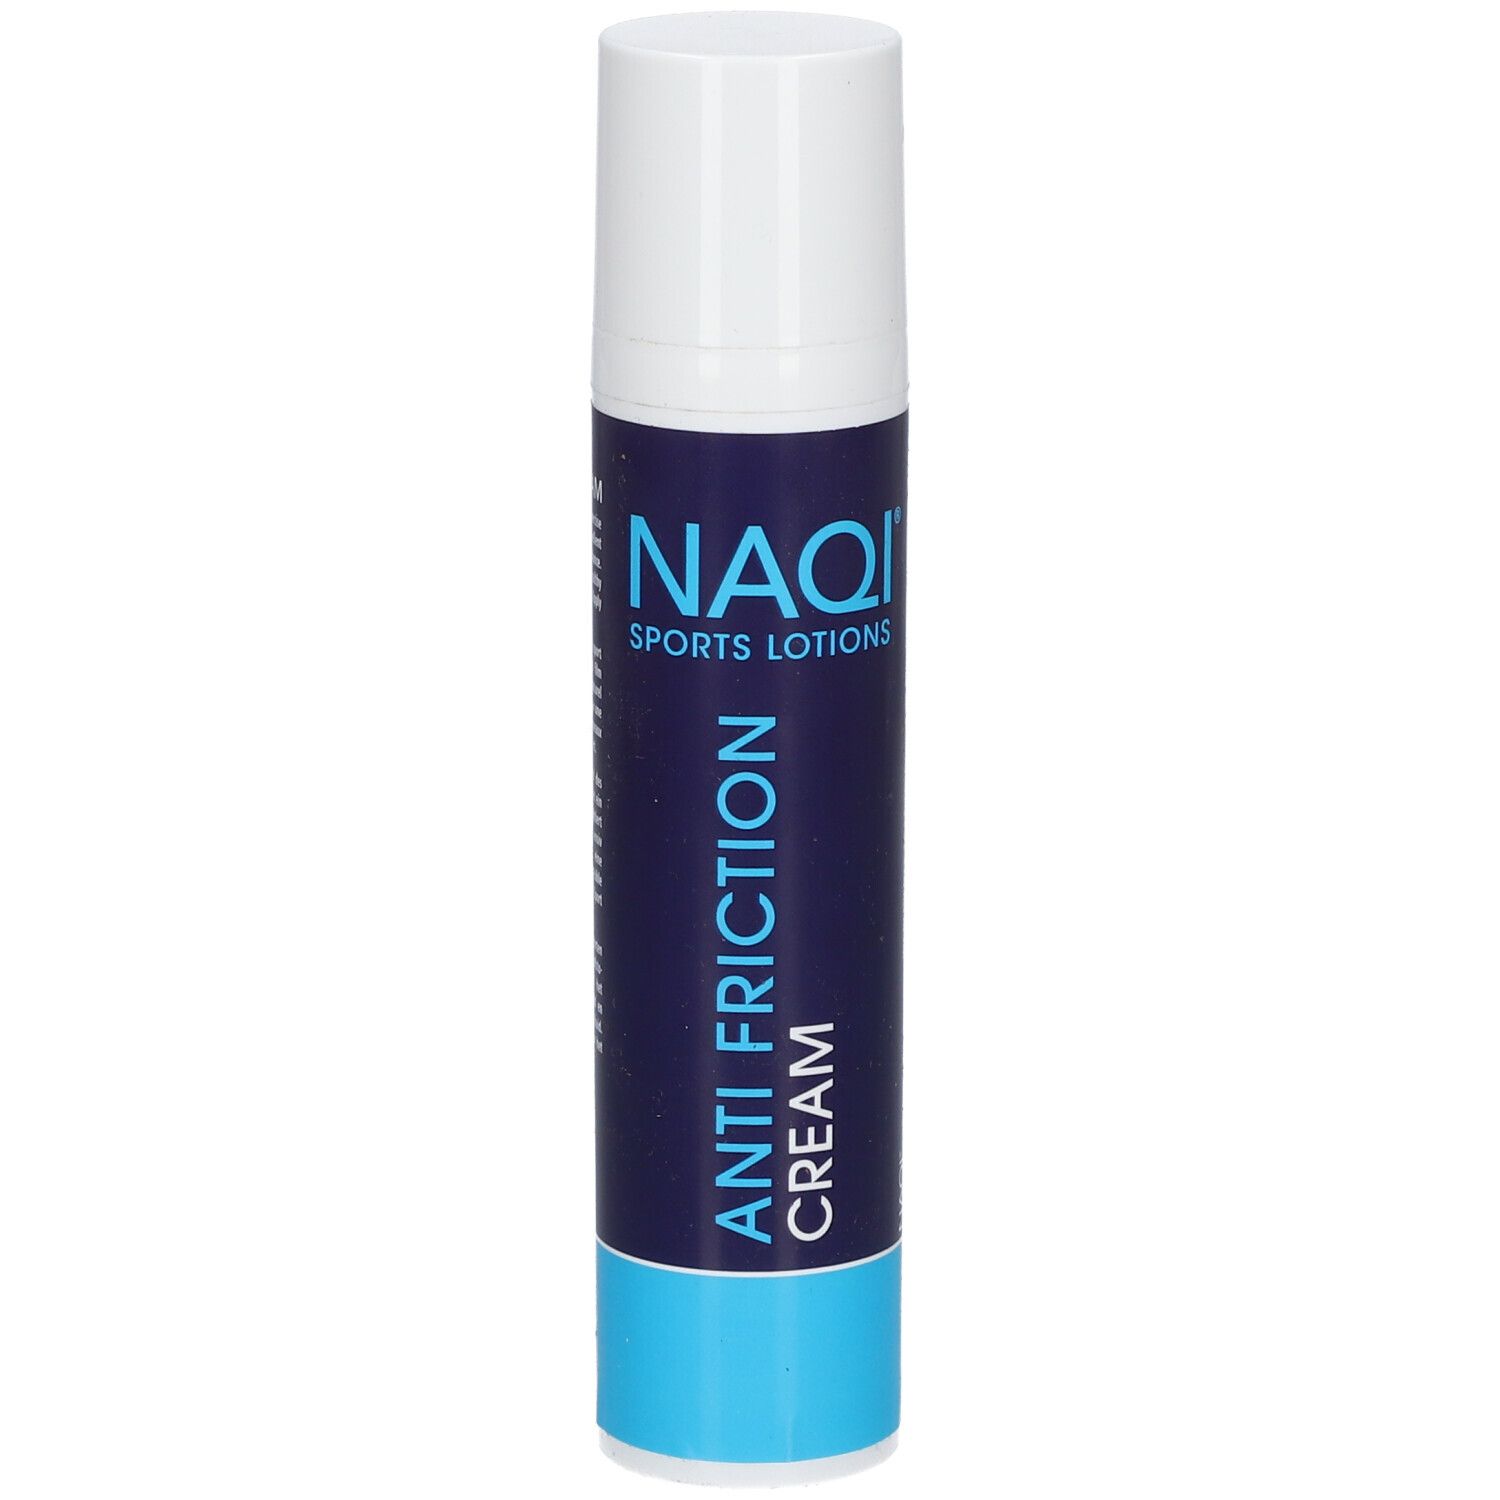 Naqi AntiFriction Cream